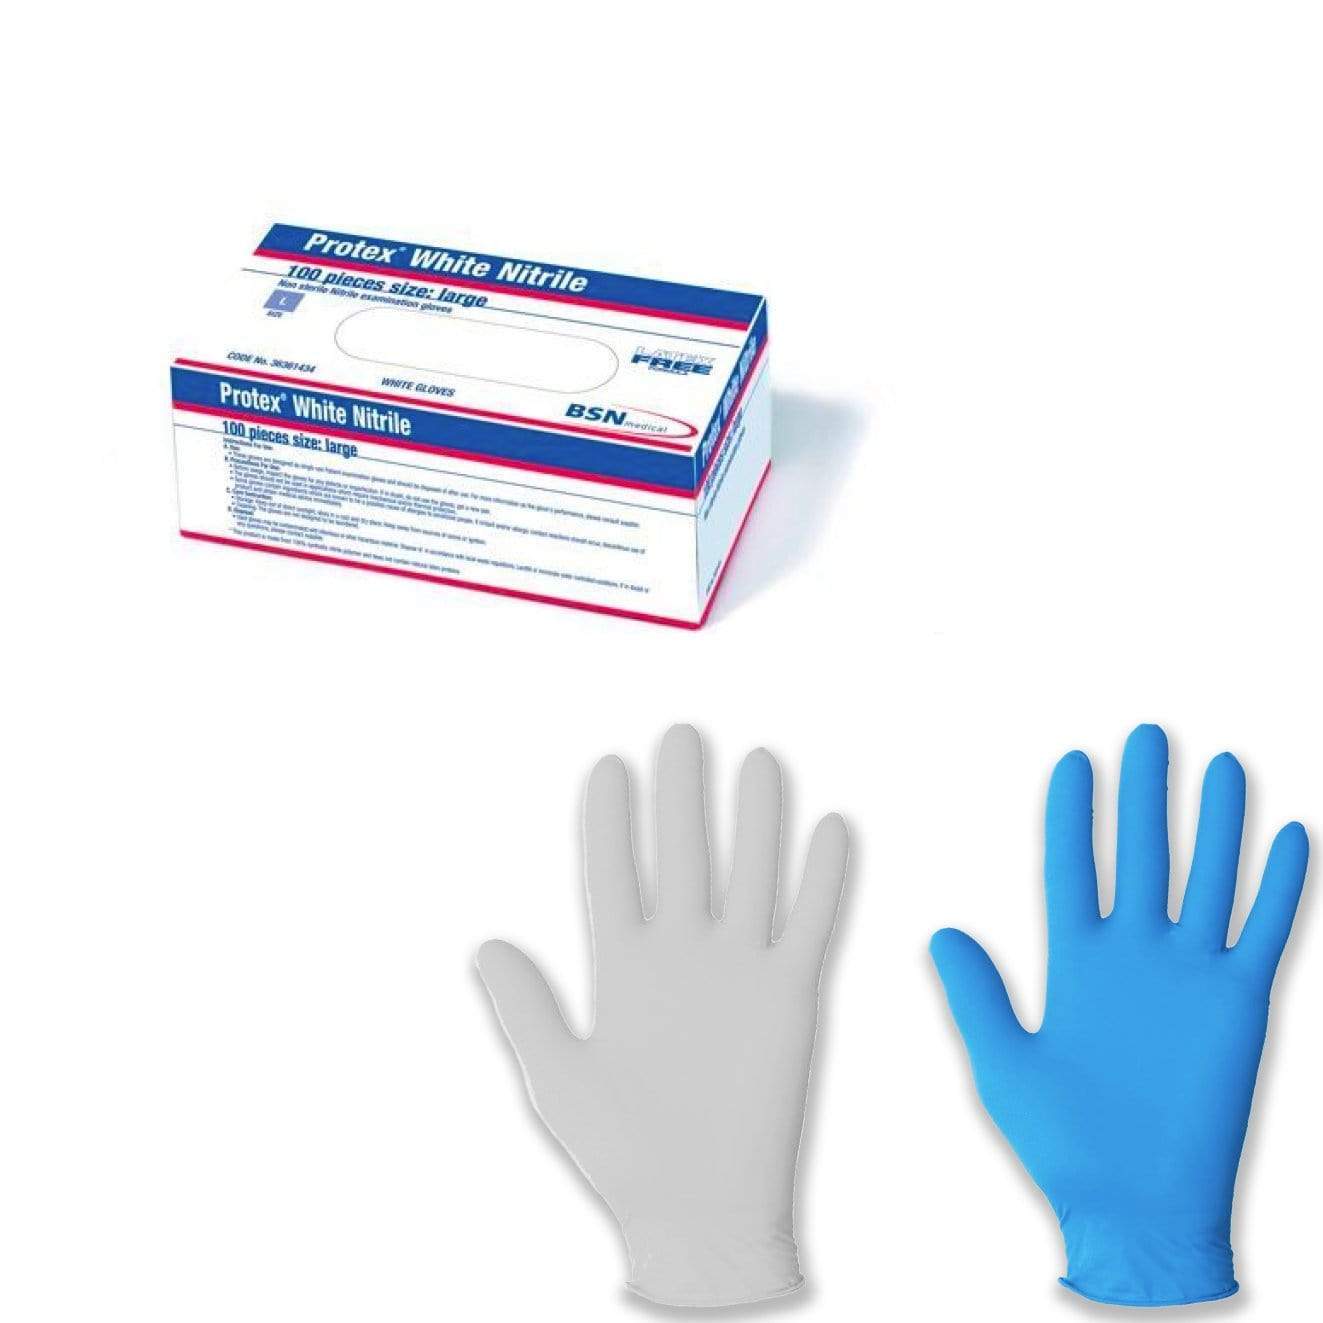 BSN Medical Protex Nitrile Gloves